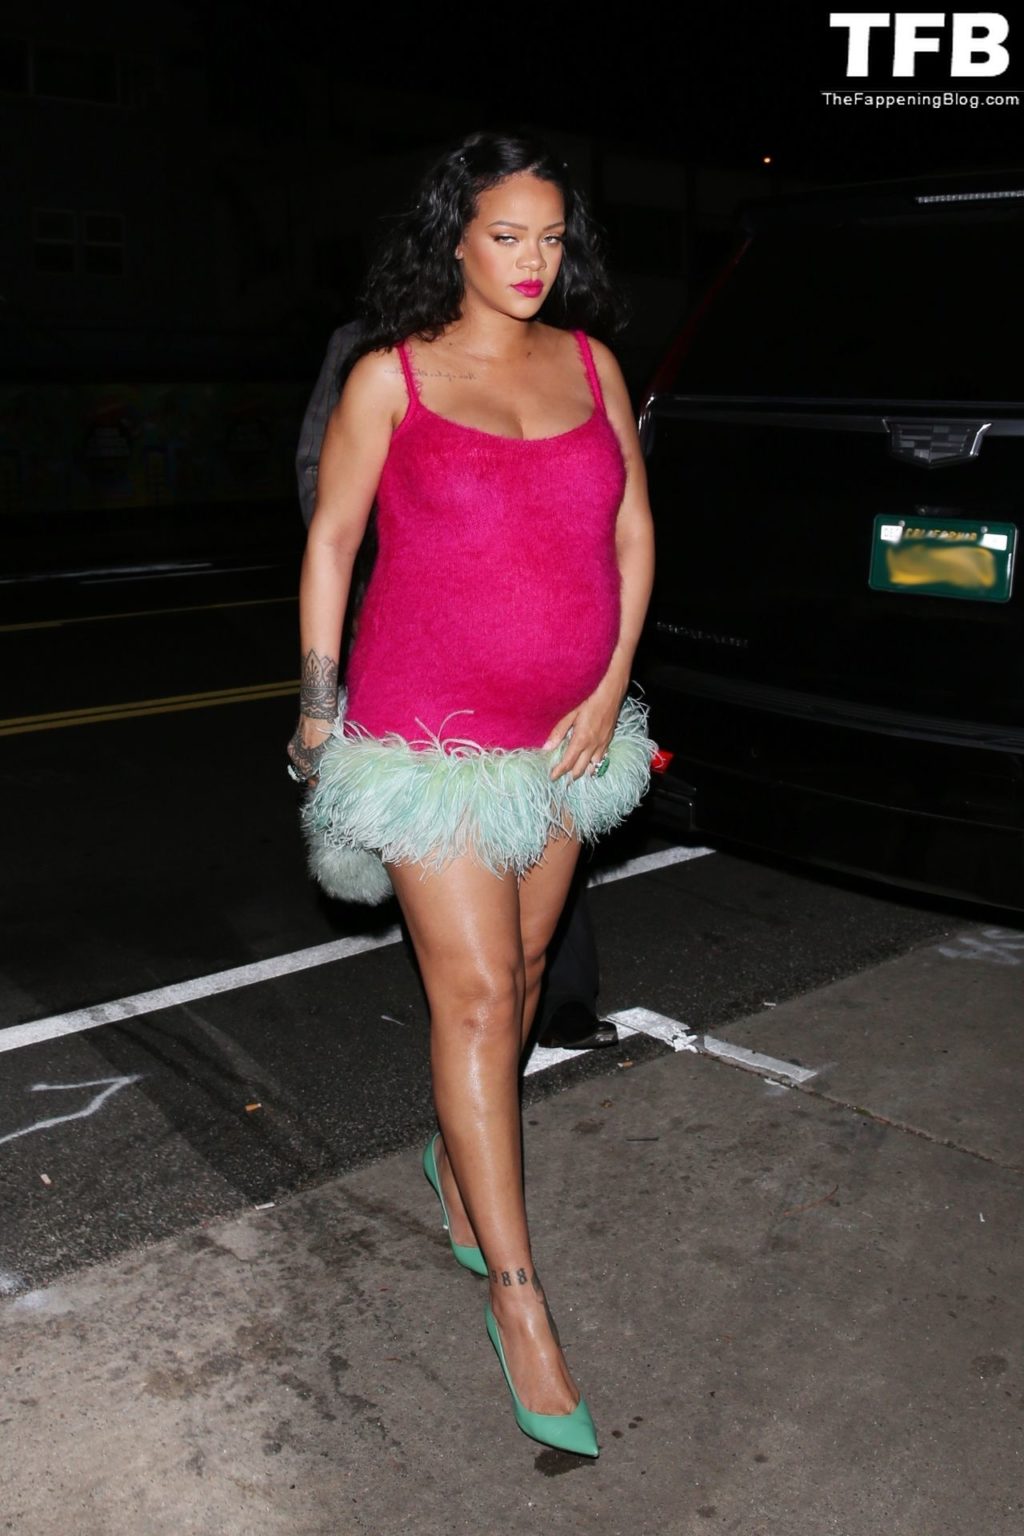 Rihanna Sexy The Fappening Blog 79 1024x1536 - Rihanna Puts Her Baby Bump on Display Grabbing Dinner at Giorgio Baldi (100 Photos)